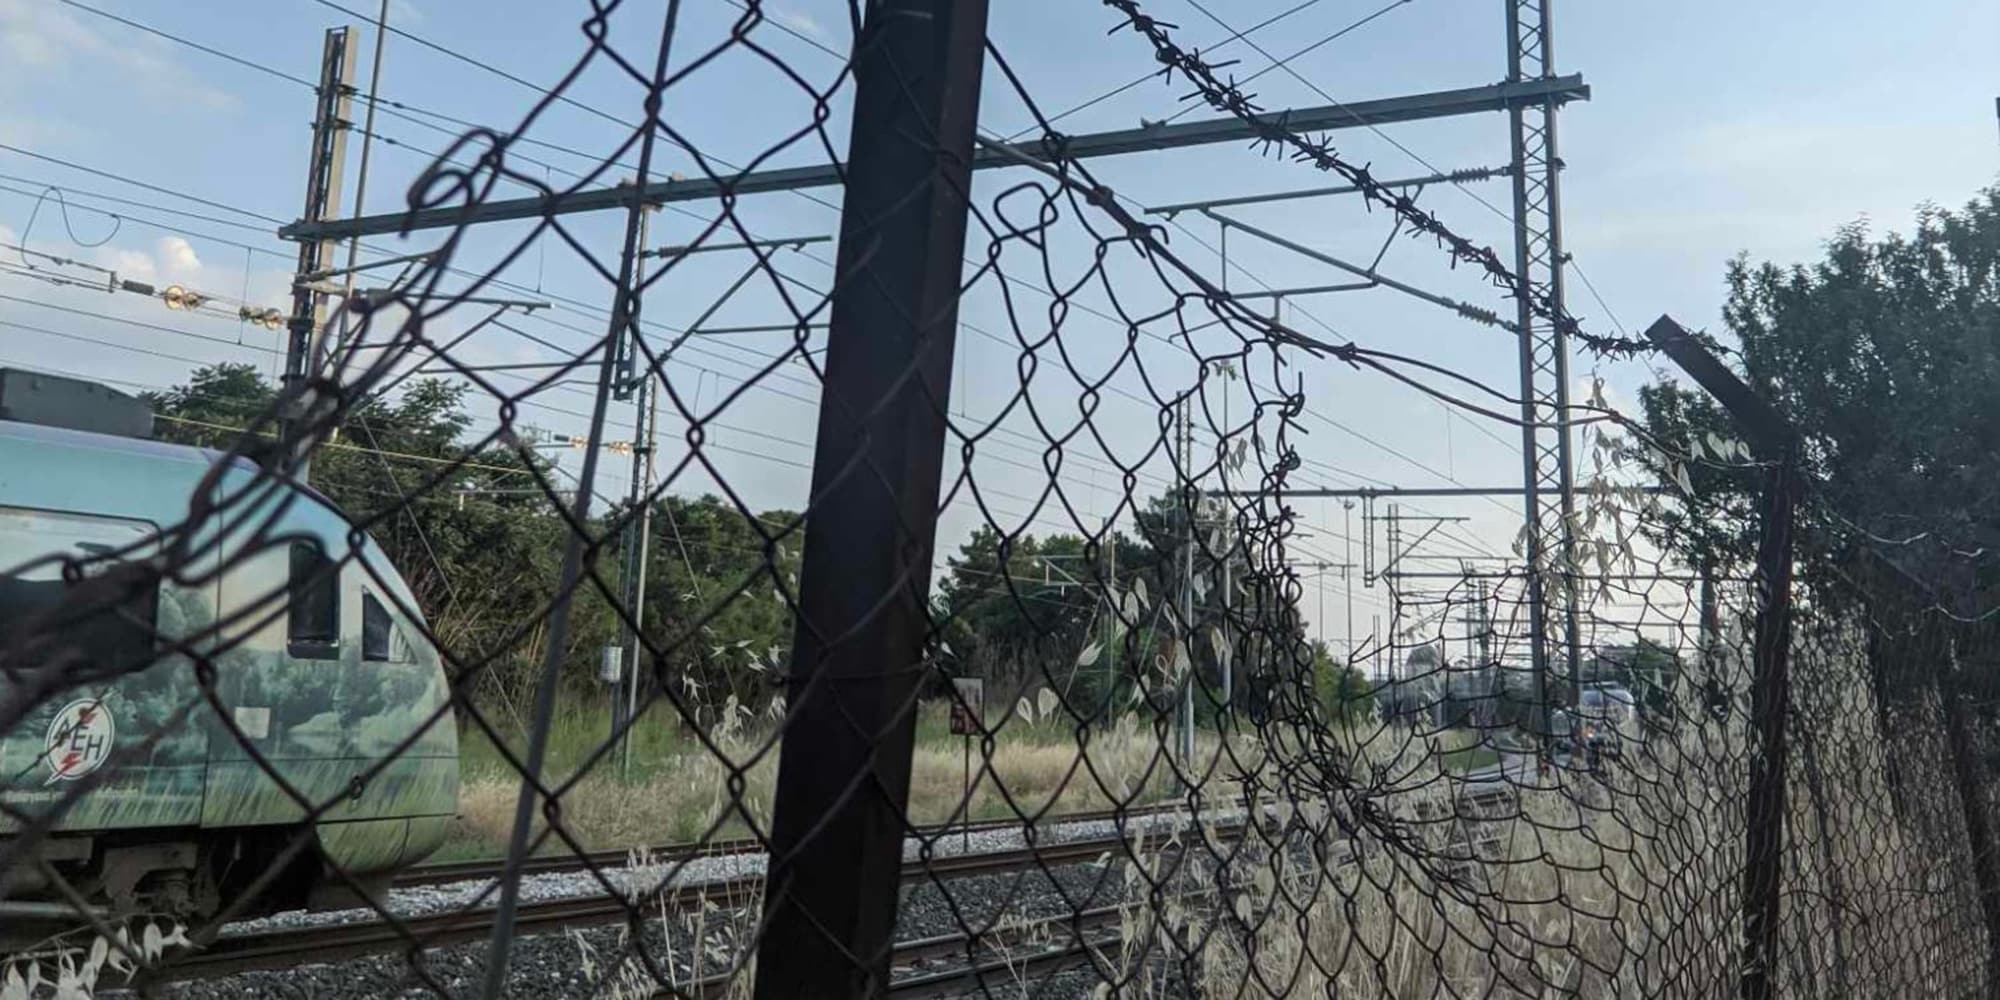 larisa trena - Λάρισα: Αποφεύχθηκε νέα τραγωδία - Δύο τρένα βρέθηκαν στην ίδια γραμμή και σταμάτησαν την τελευταία στιγμή